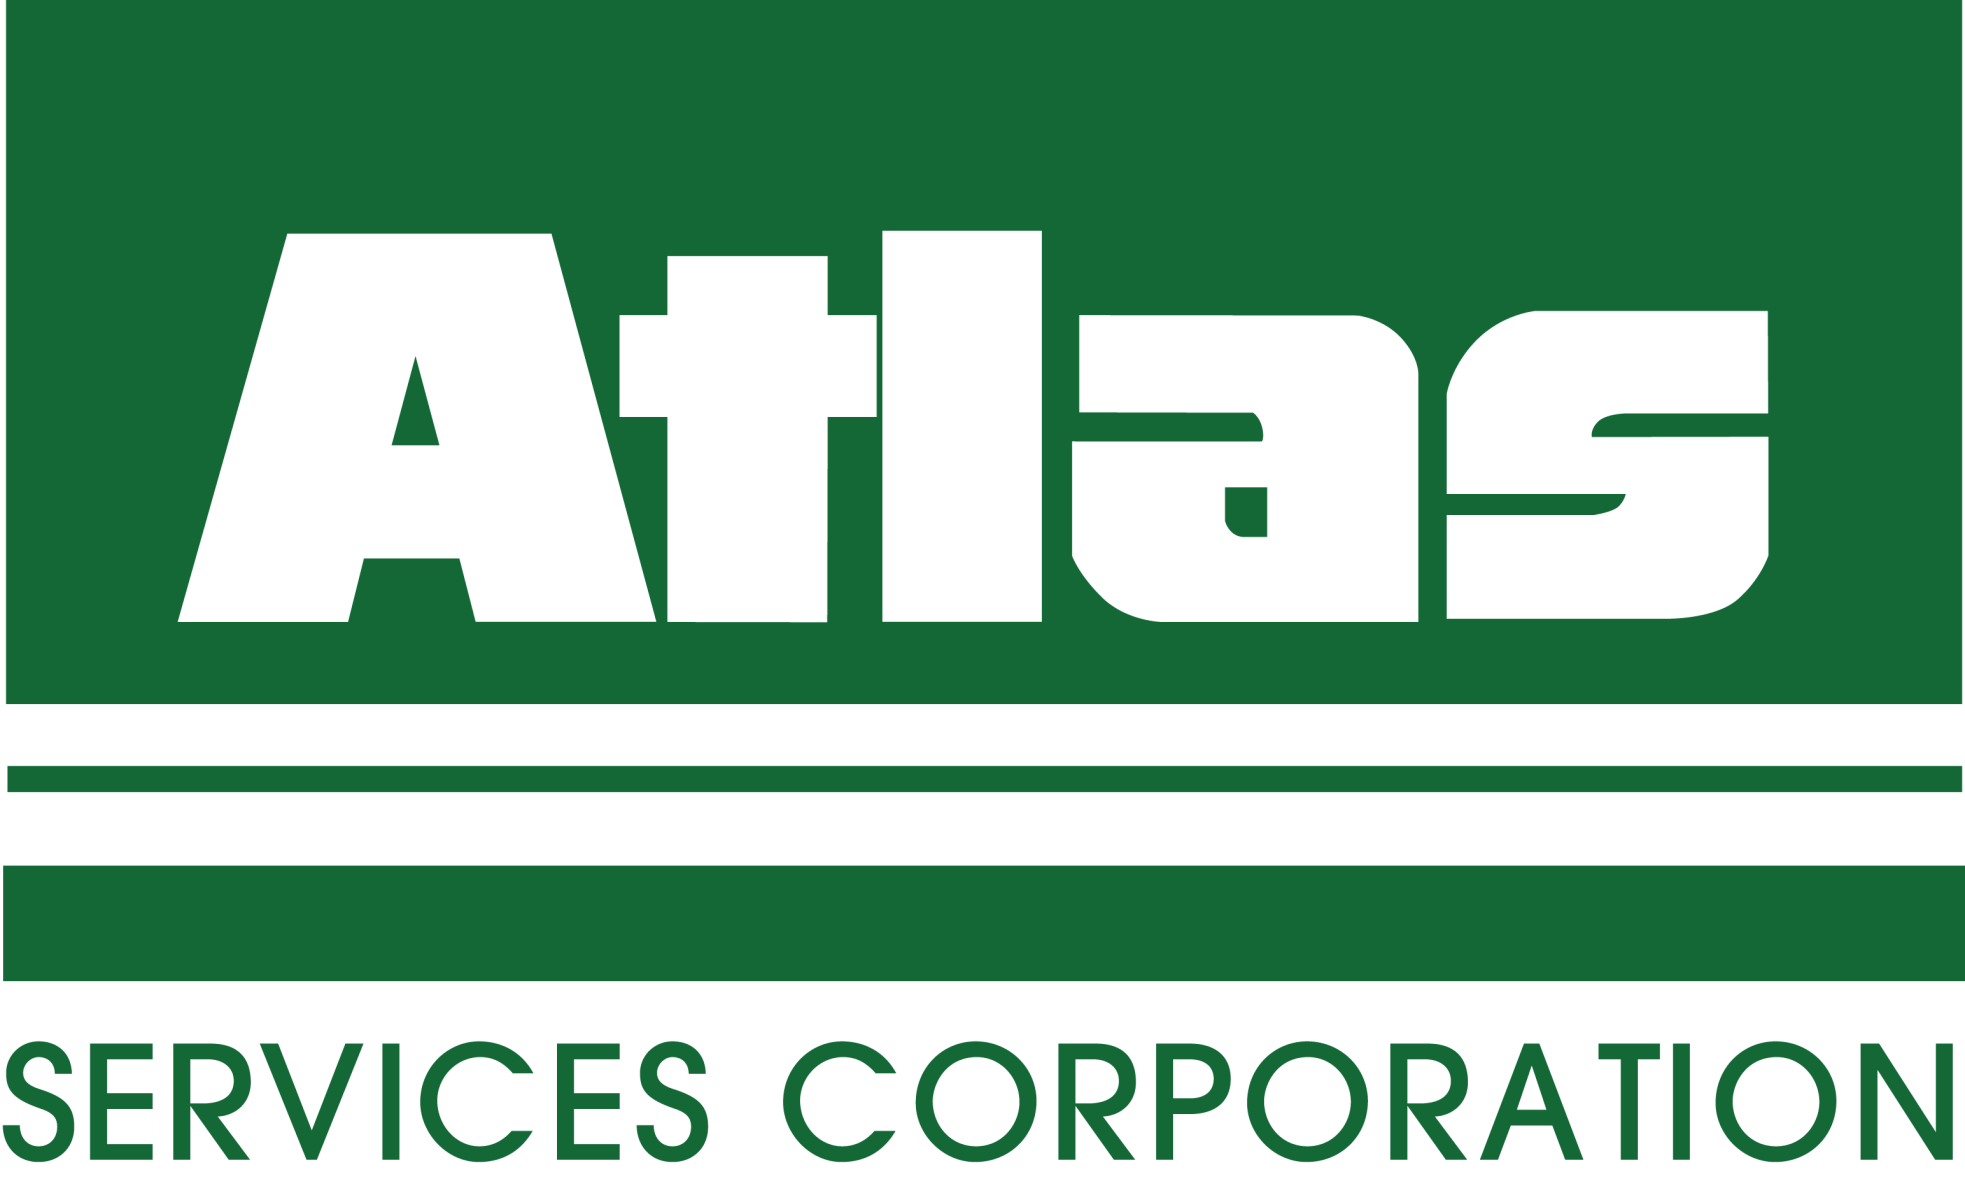 Atlas Services